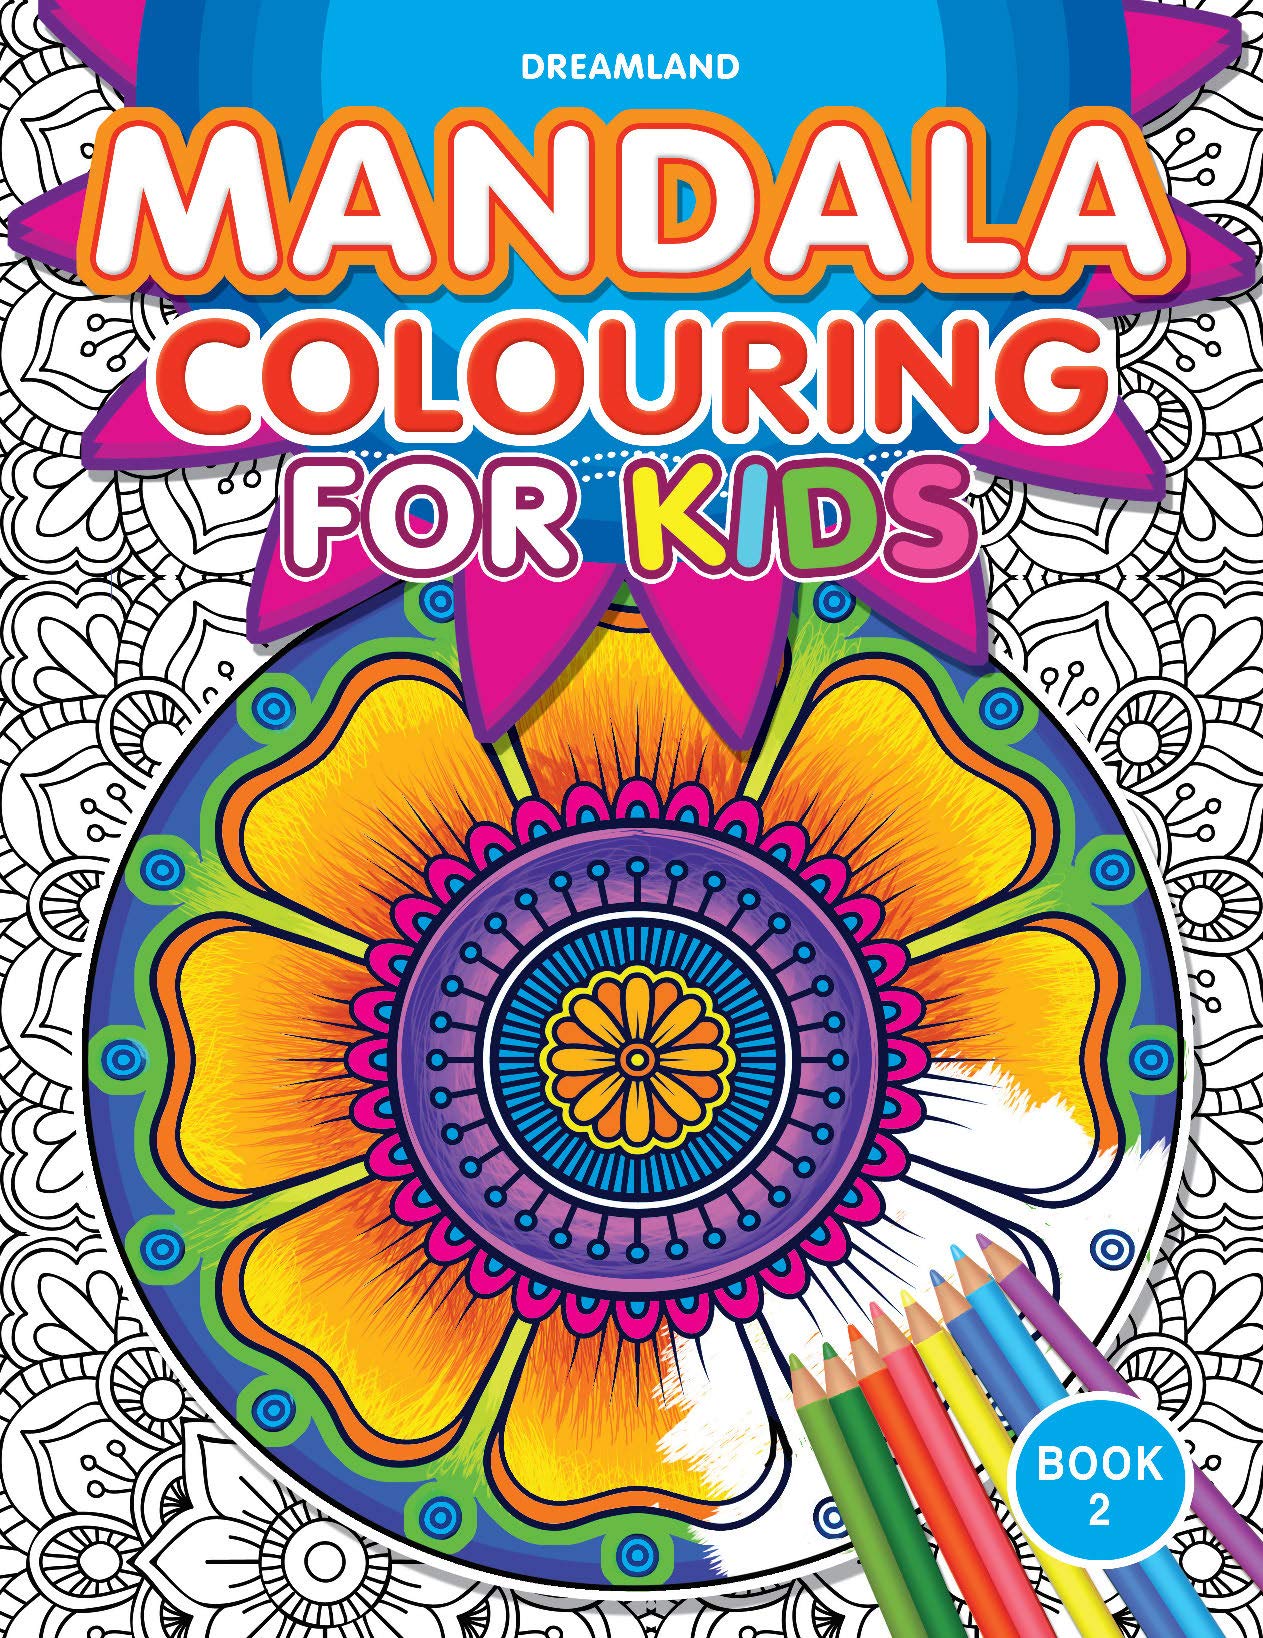 Mandala Colouring for Kids- Book 2 